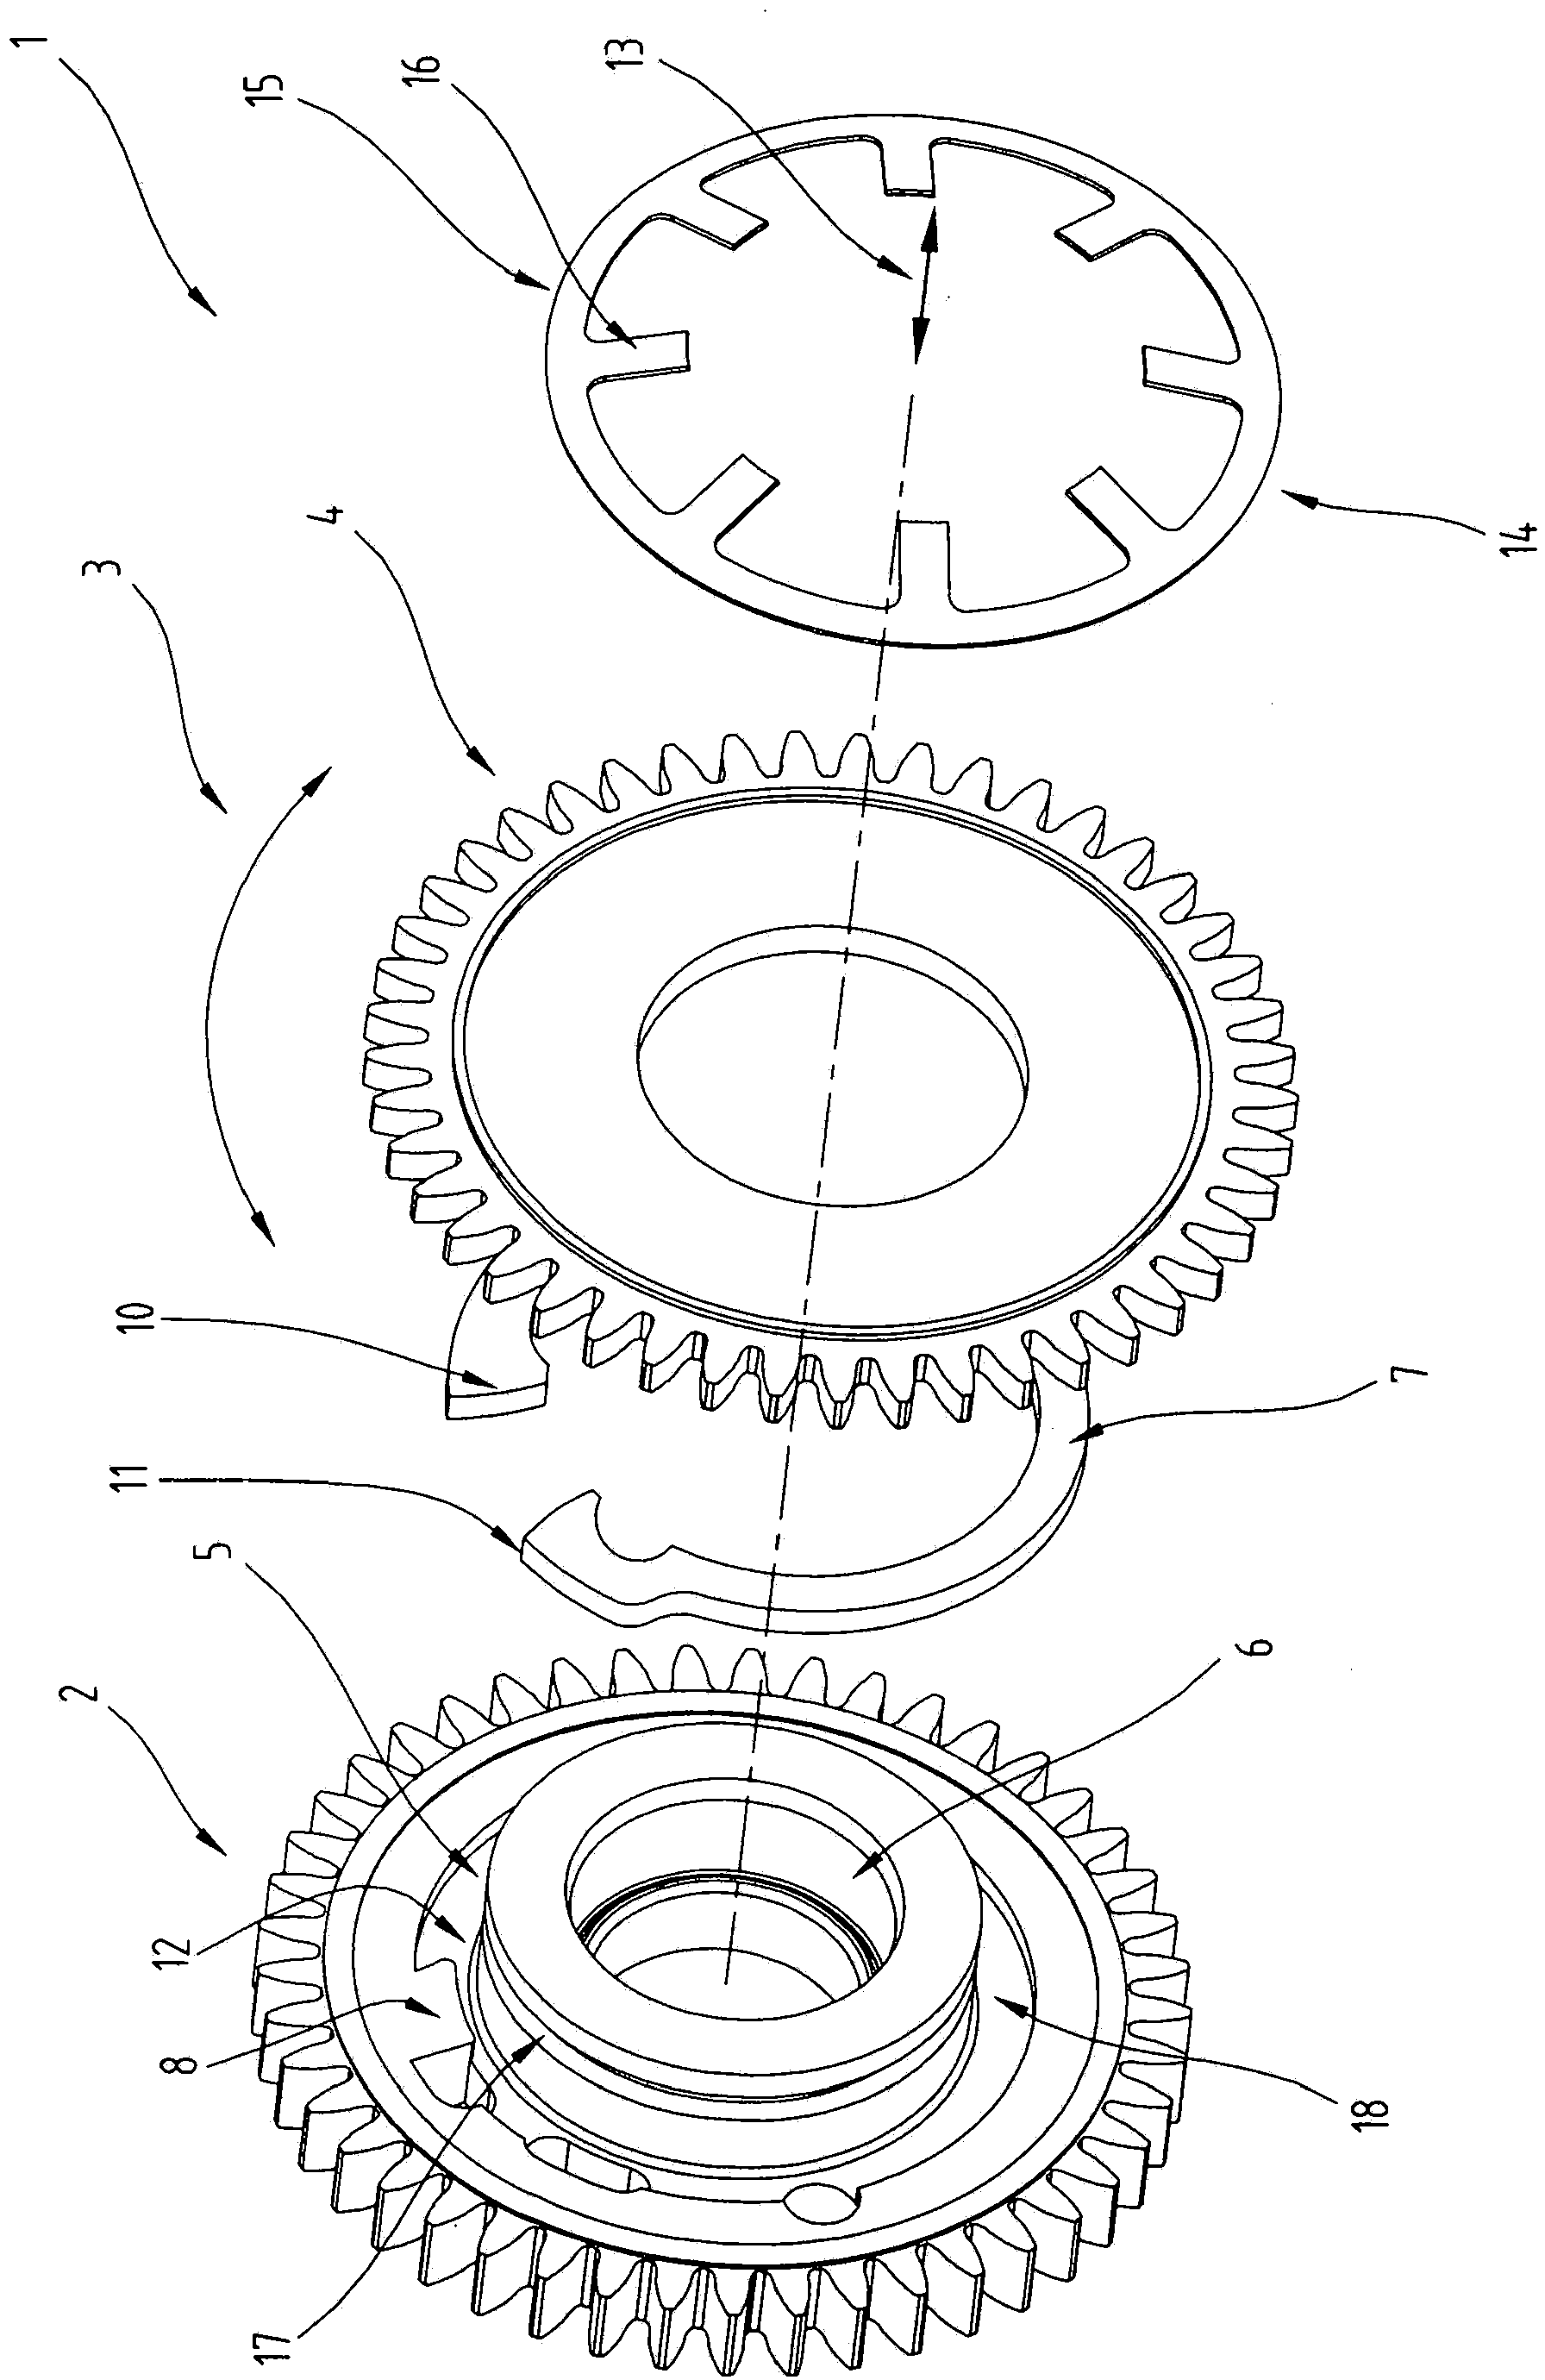 Gearwheel arrangement